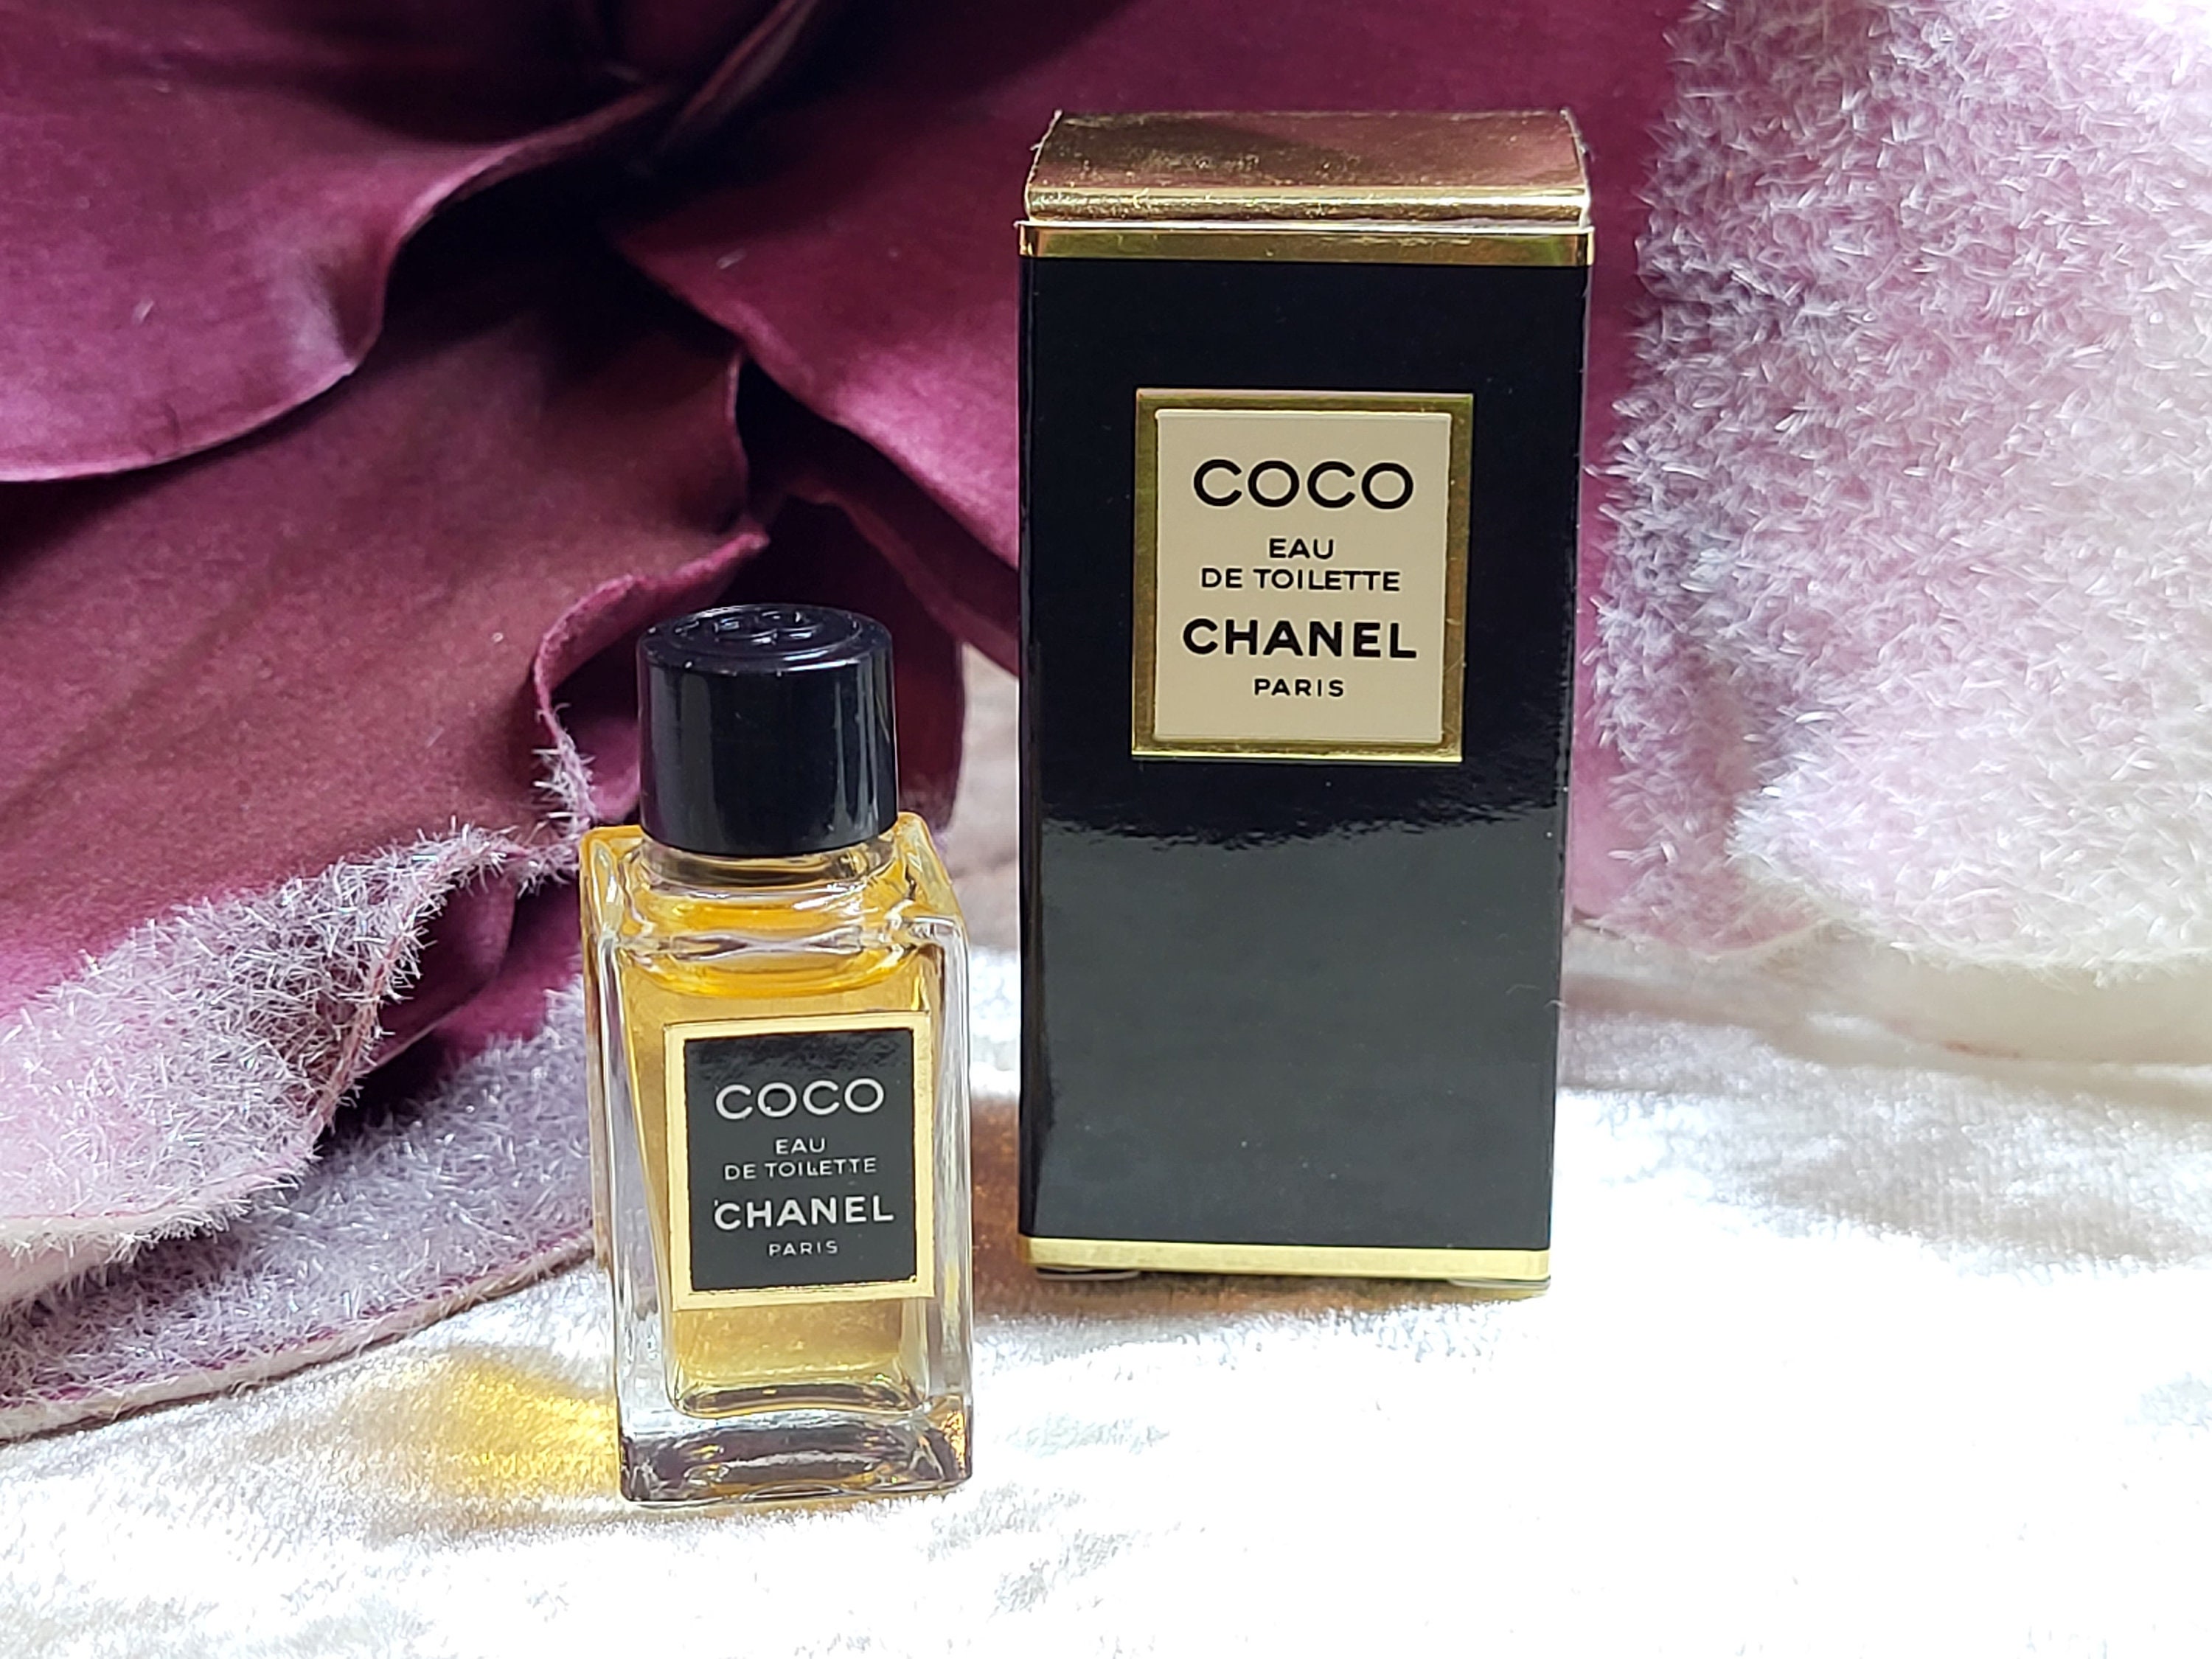 Chanel Coco EDP 100ml - Exquisite Women's Perfume, D'Scentsation